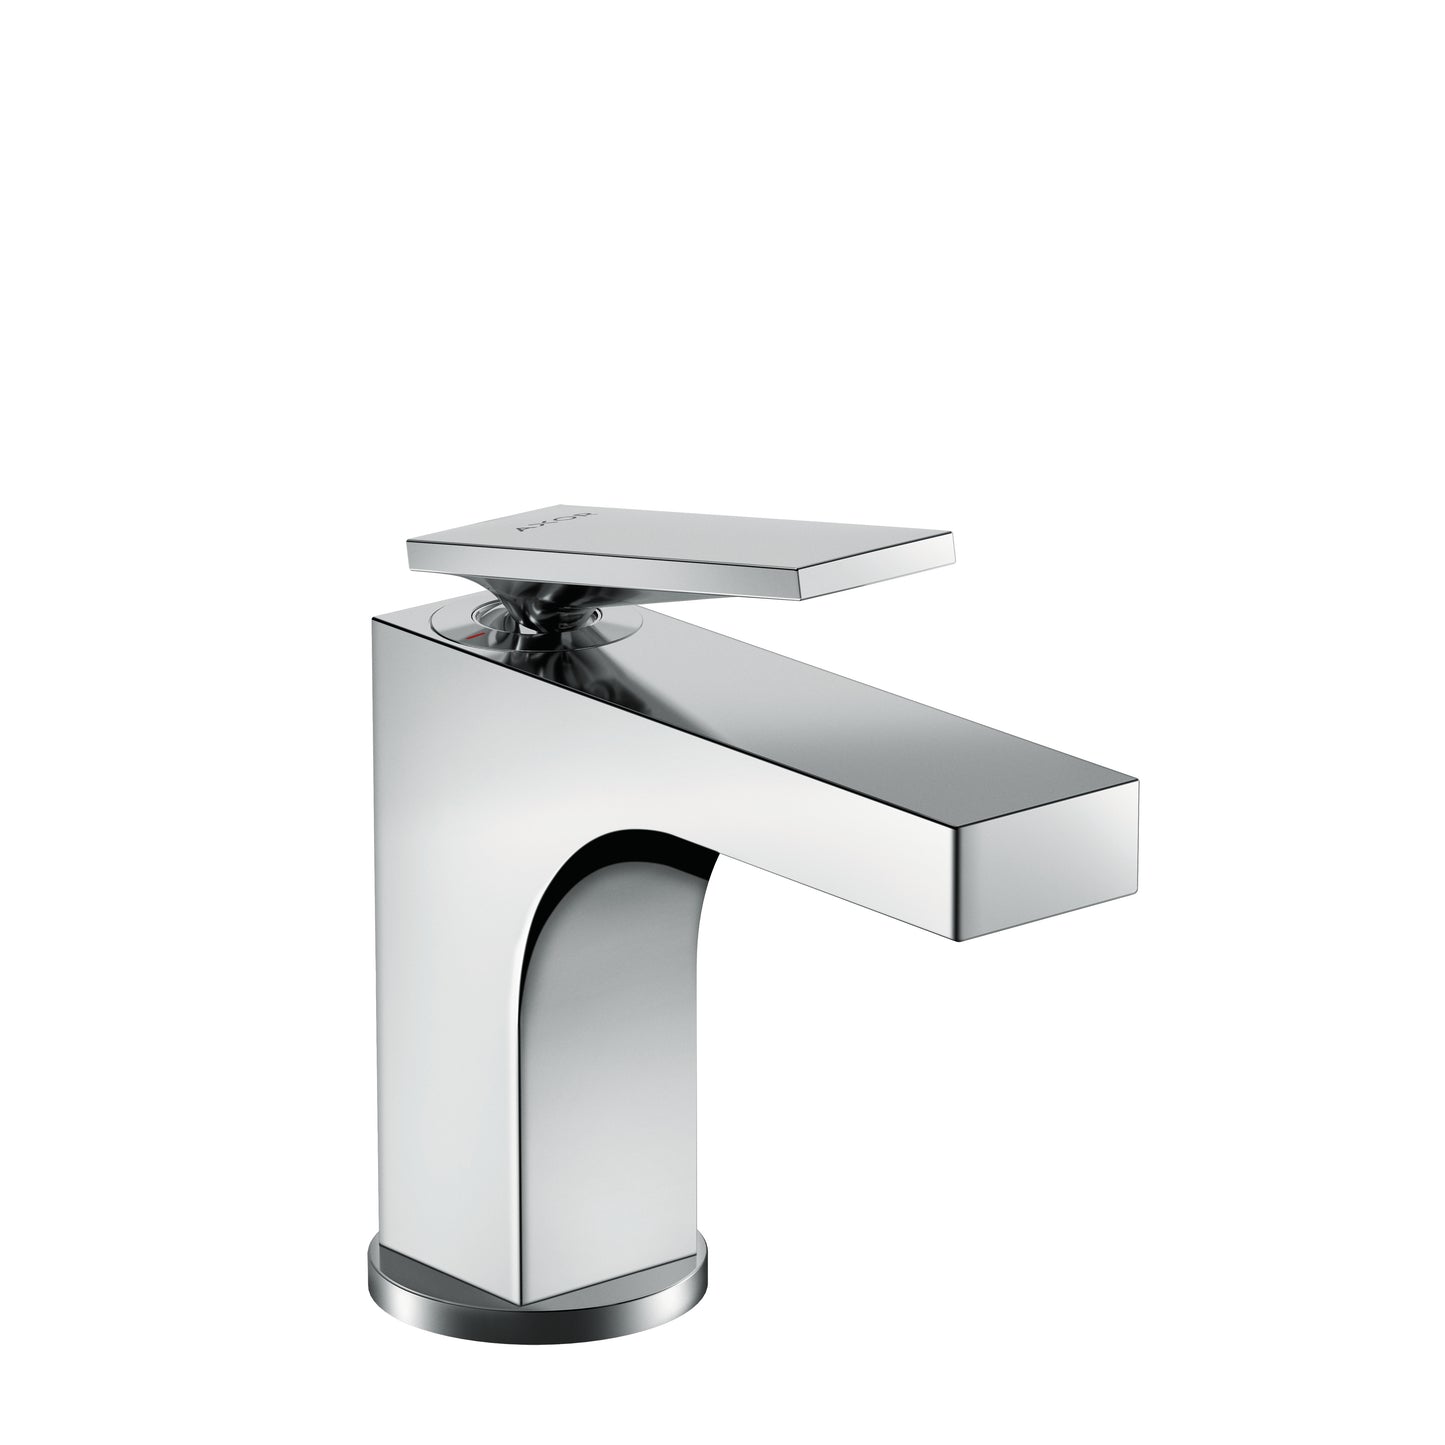 AXOR 39022001 Chrome Citterio Modern Single Hole Bathroom Faucet 1.2 GPM